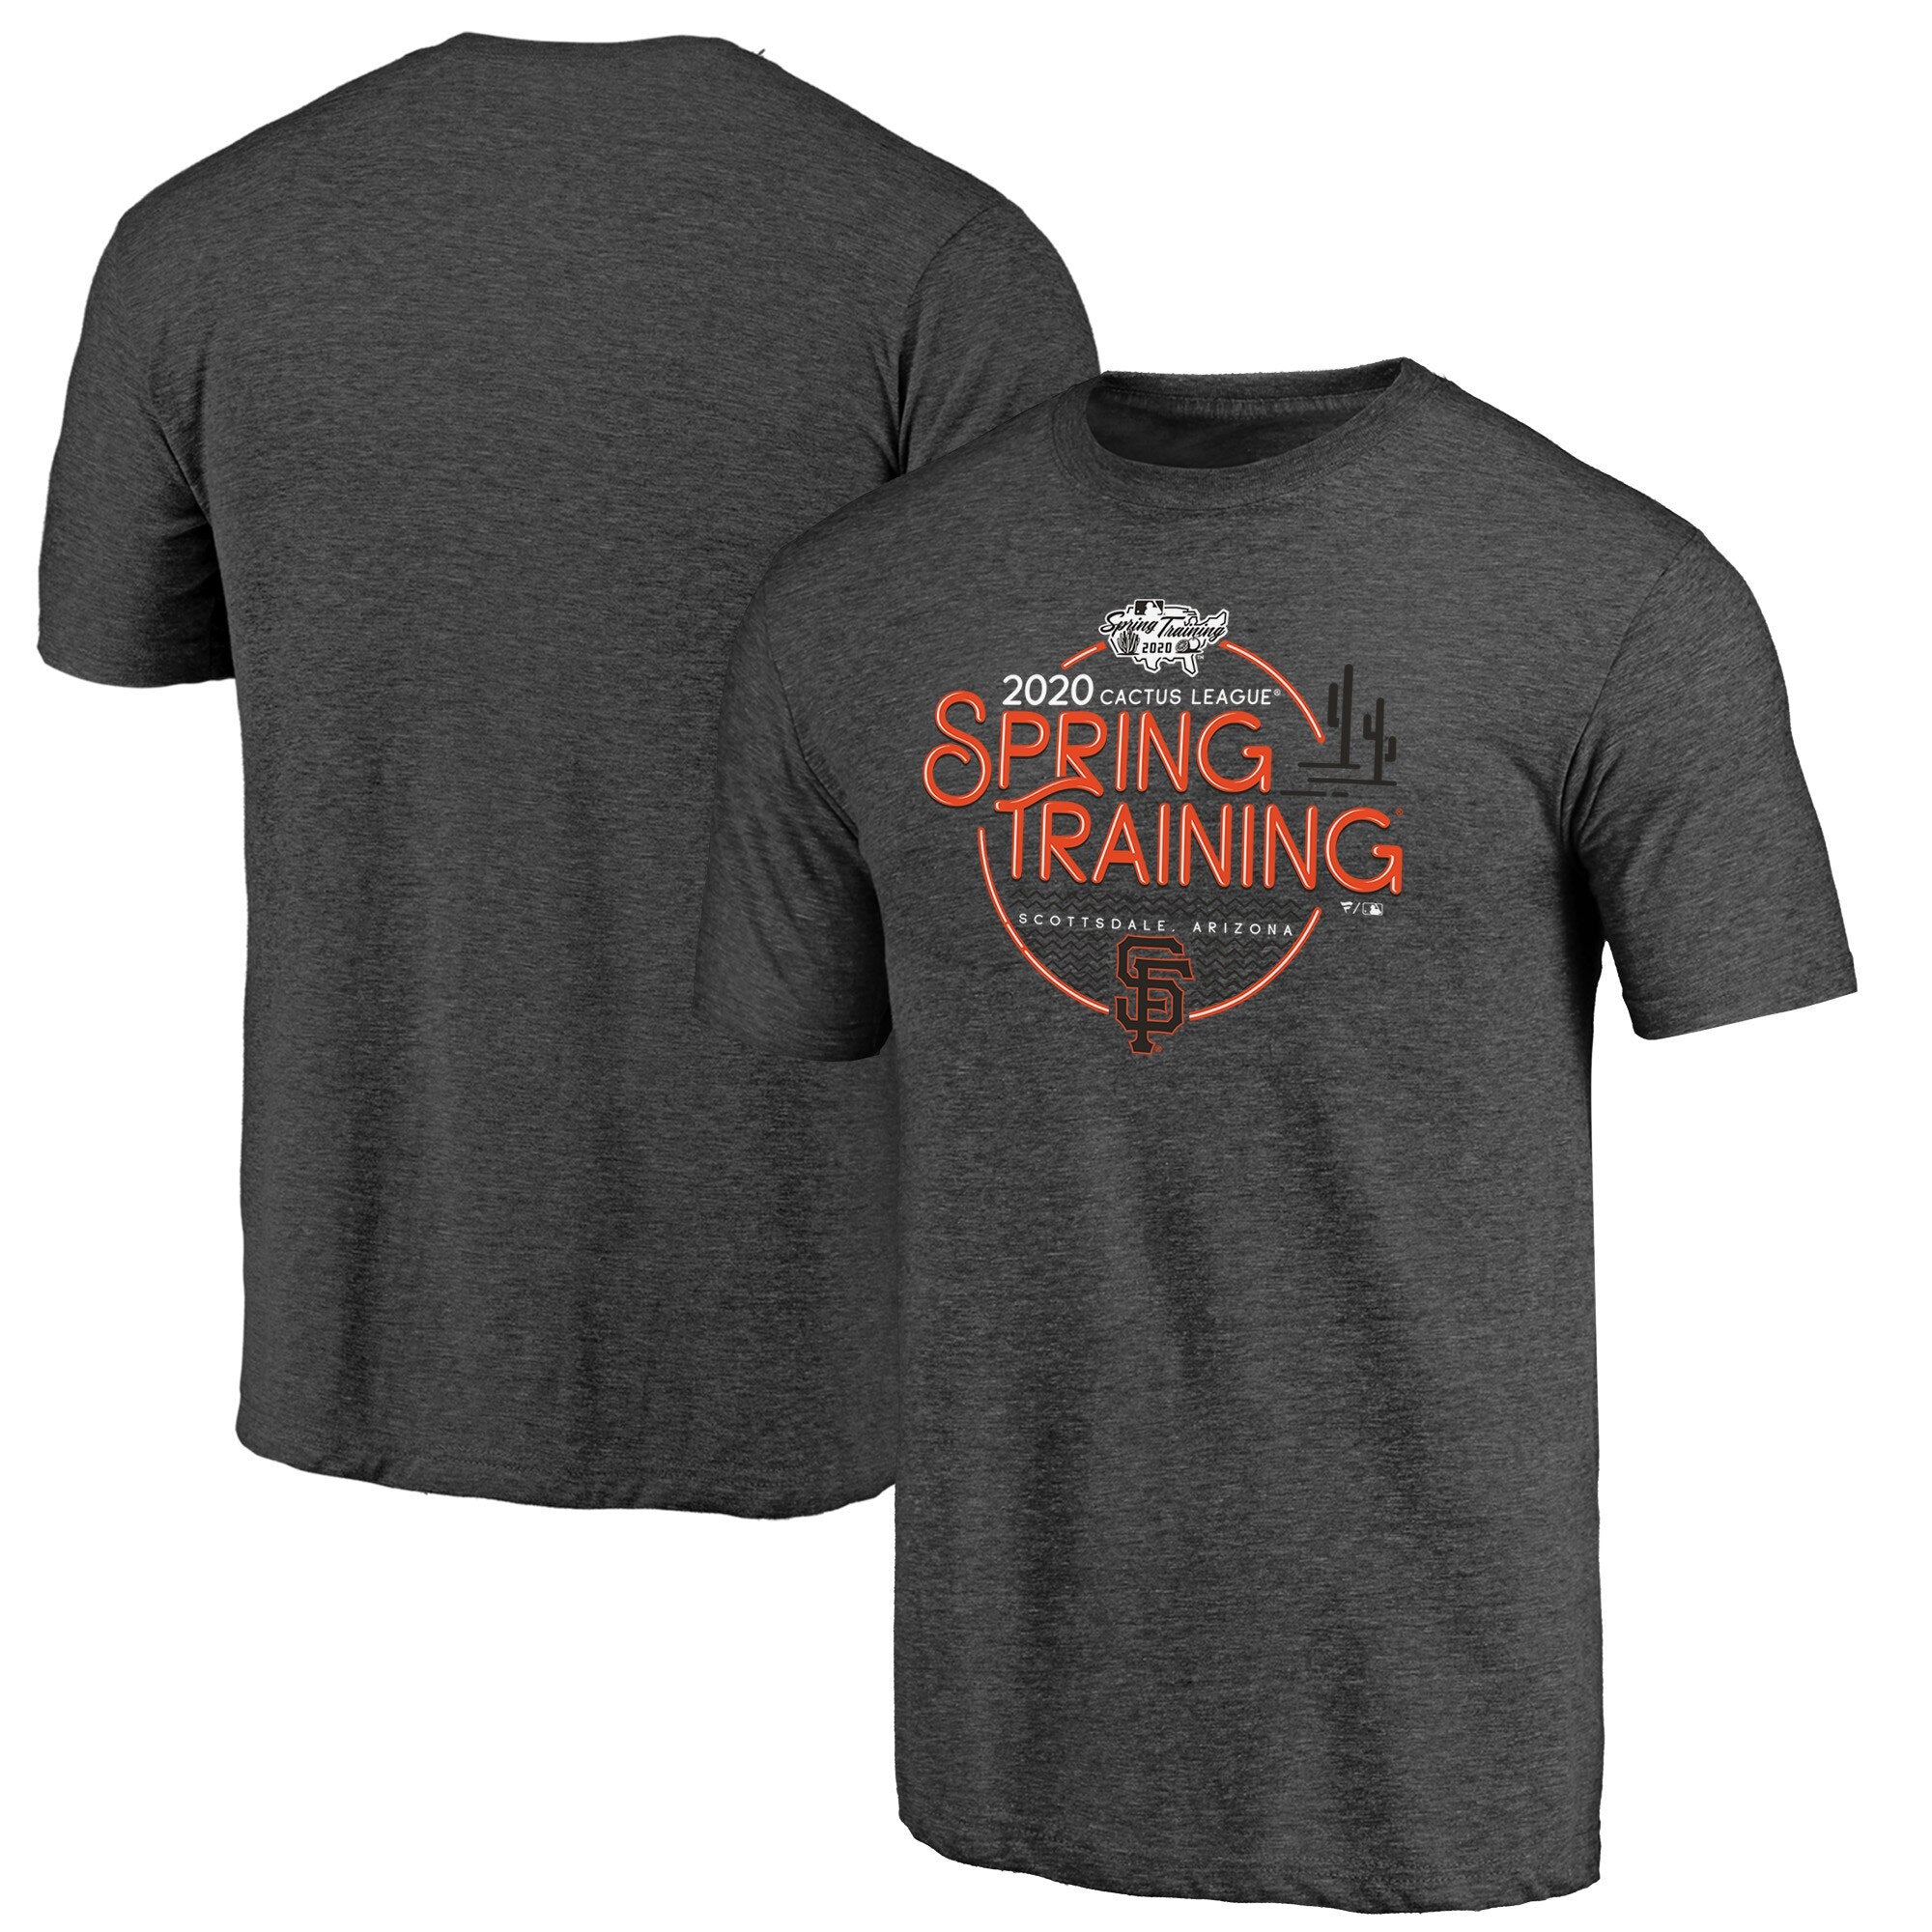 Fanatics San Francisco Giants Men's Spring Training Round T-Shirt 20 Gry / M